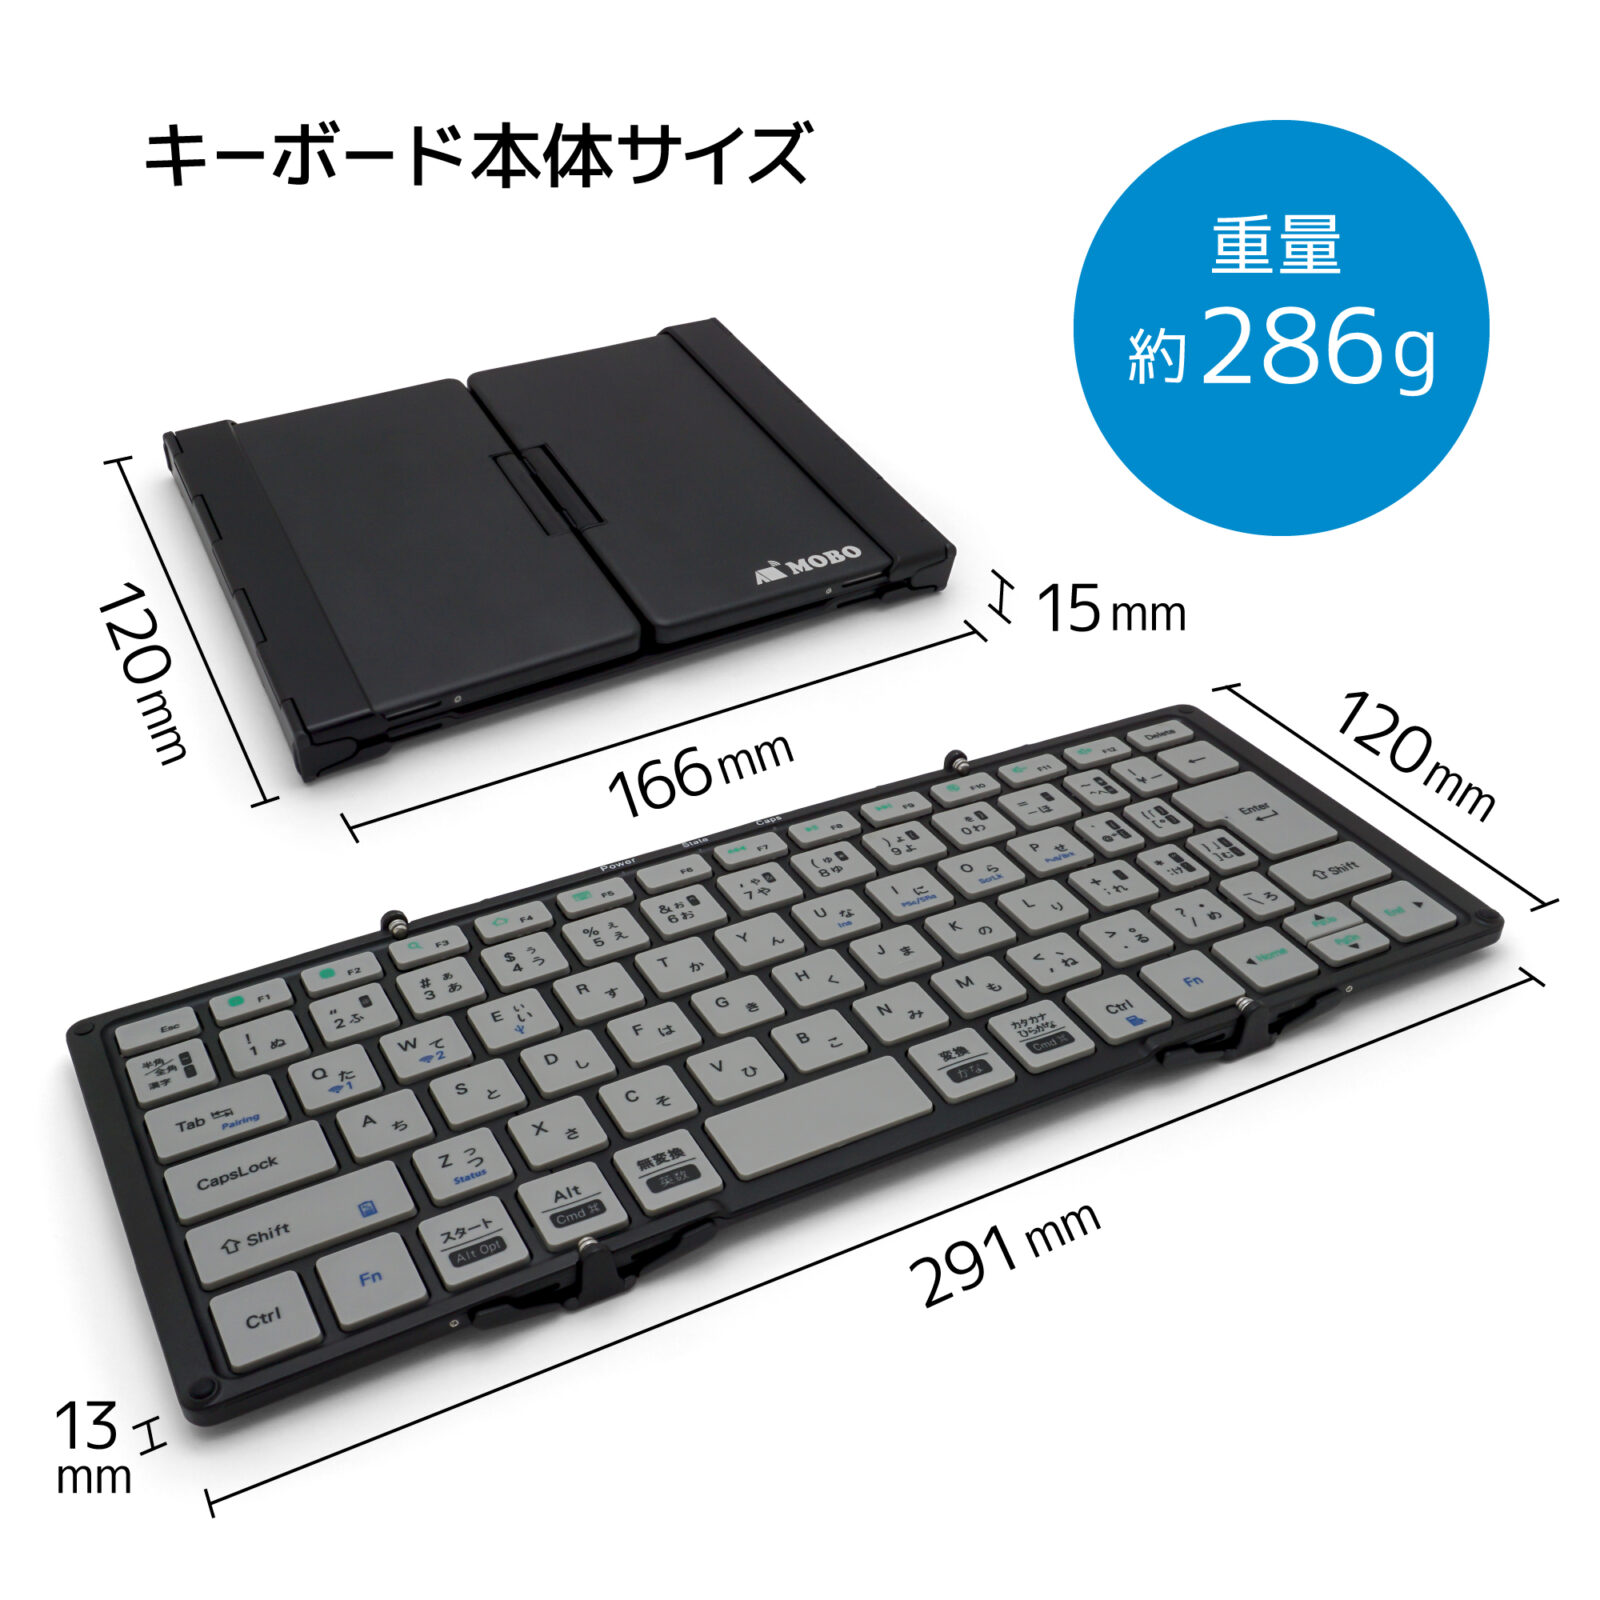 MOBO keyboard2 折りたたみ式 Bluetoothキーボード